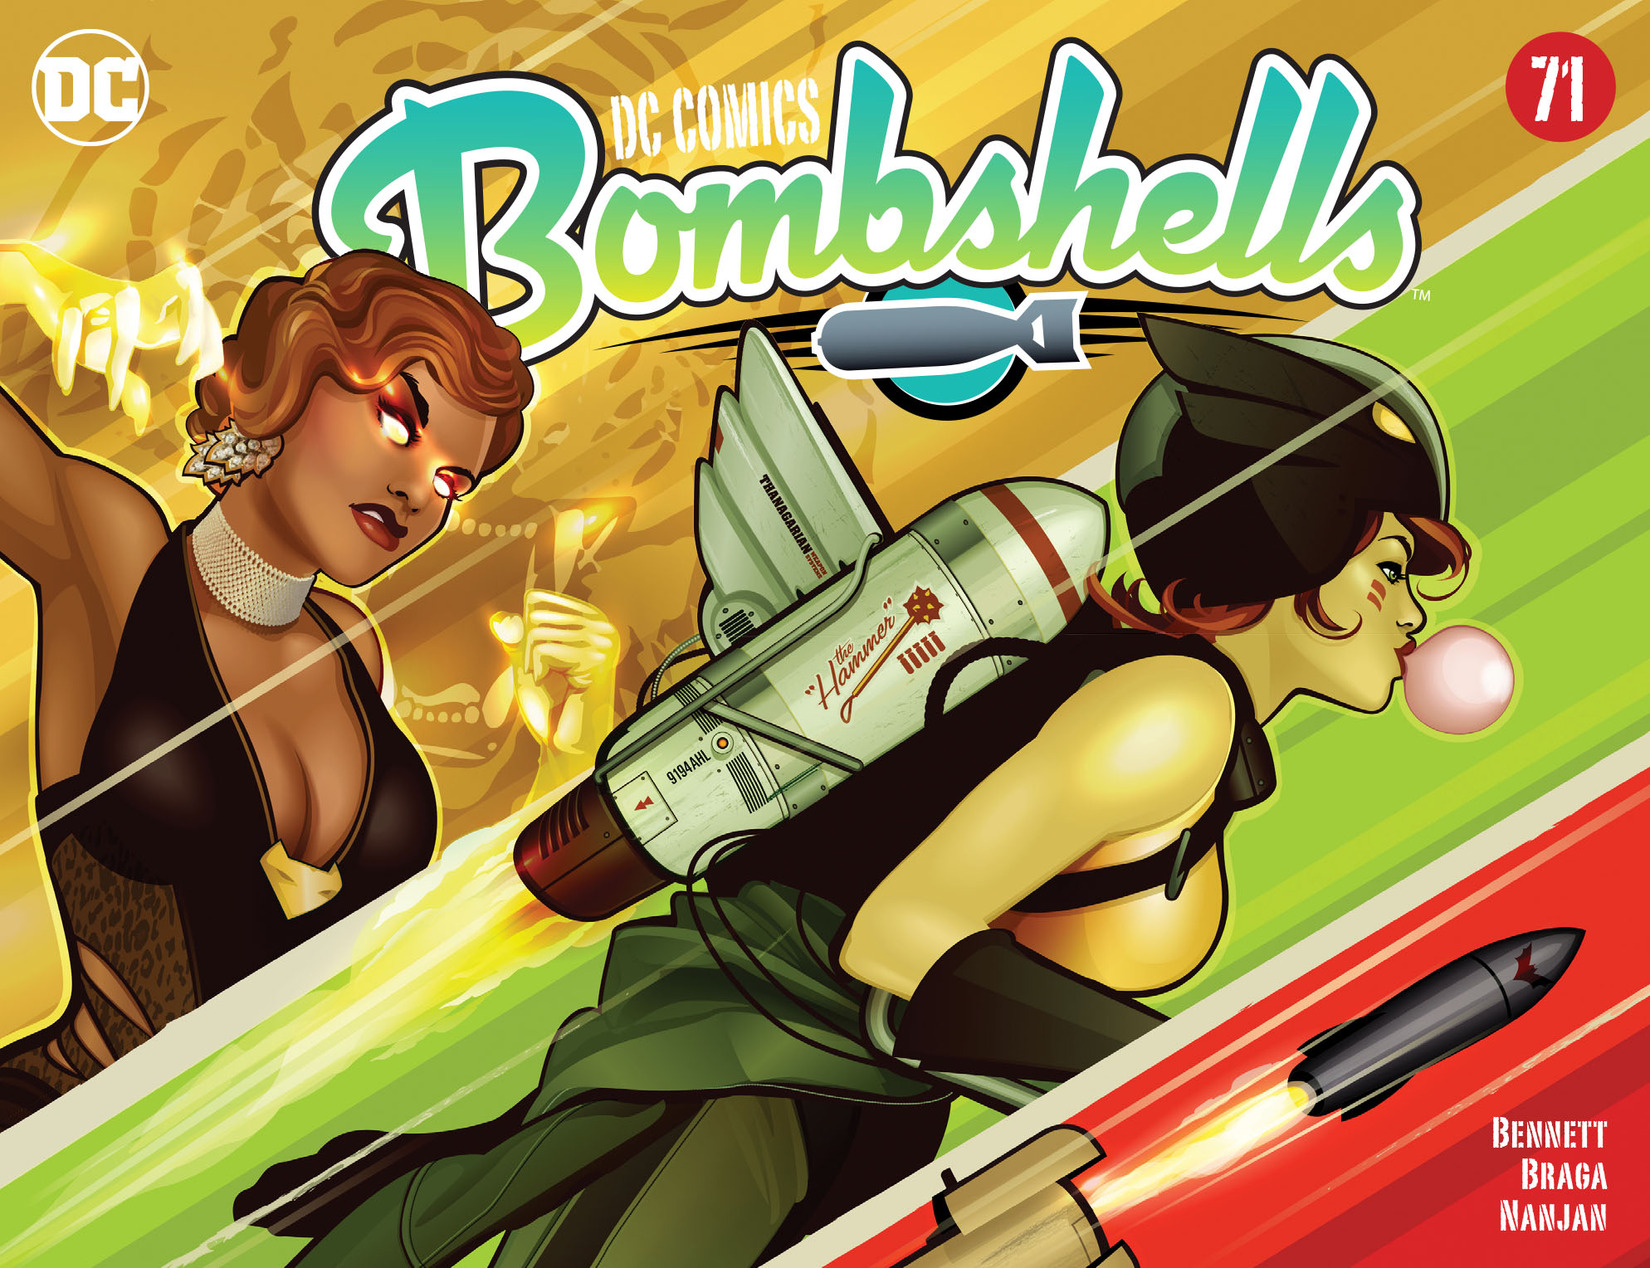 DC Comics - Bombshells (2015-): Chapter 71 - Page 1